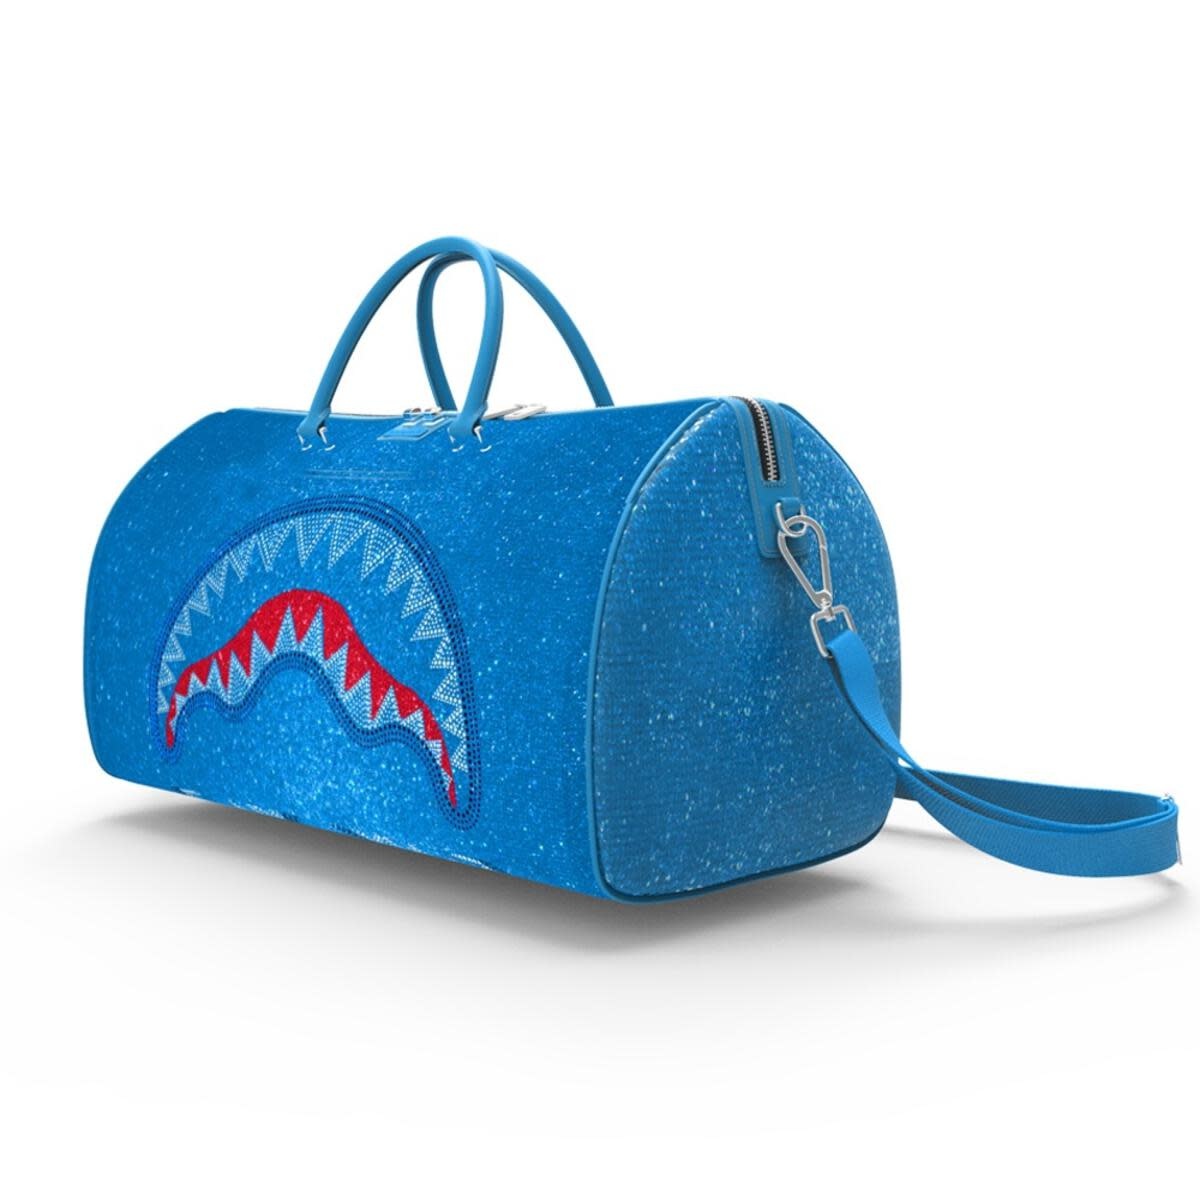 Brown Sprayground Shark Duffle Bag